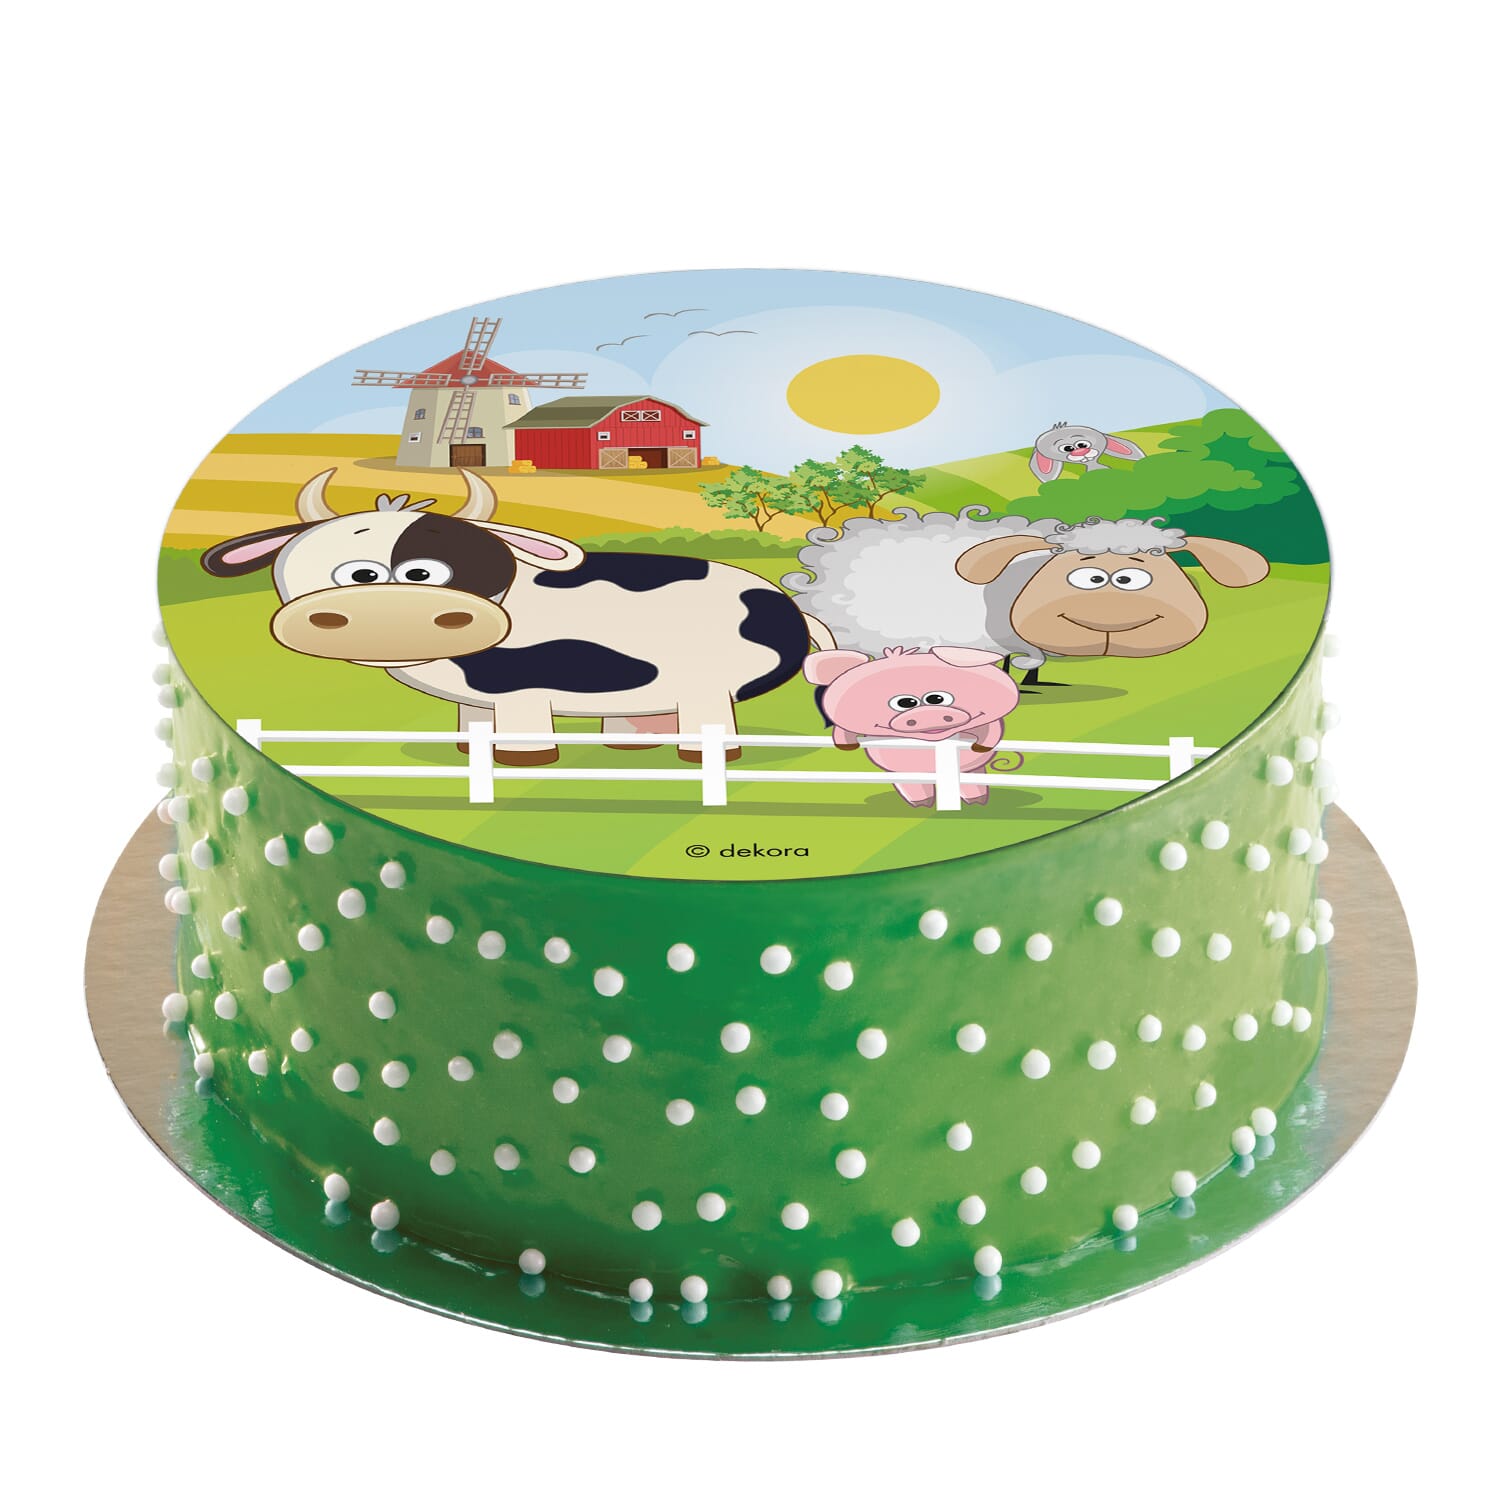 30 Pcs Farm Animal Cow Cake Topper Decorations For Farm Animal Theme  Birthday Baby Shower Party - Walmart.com